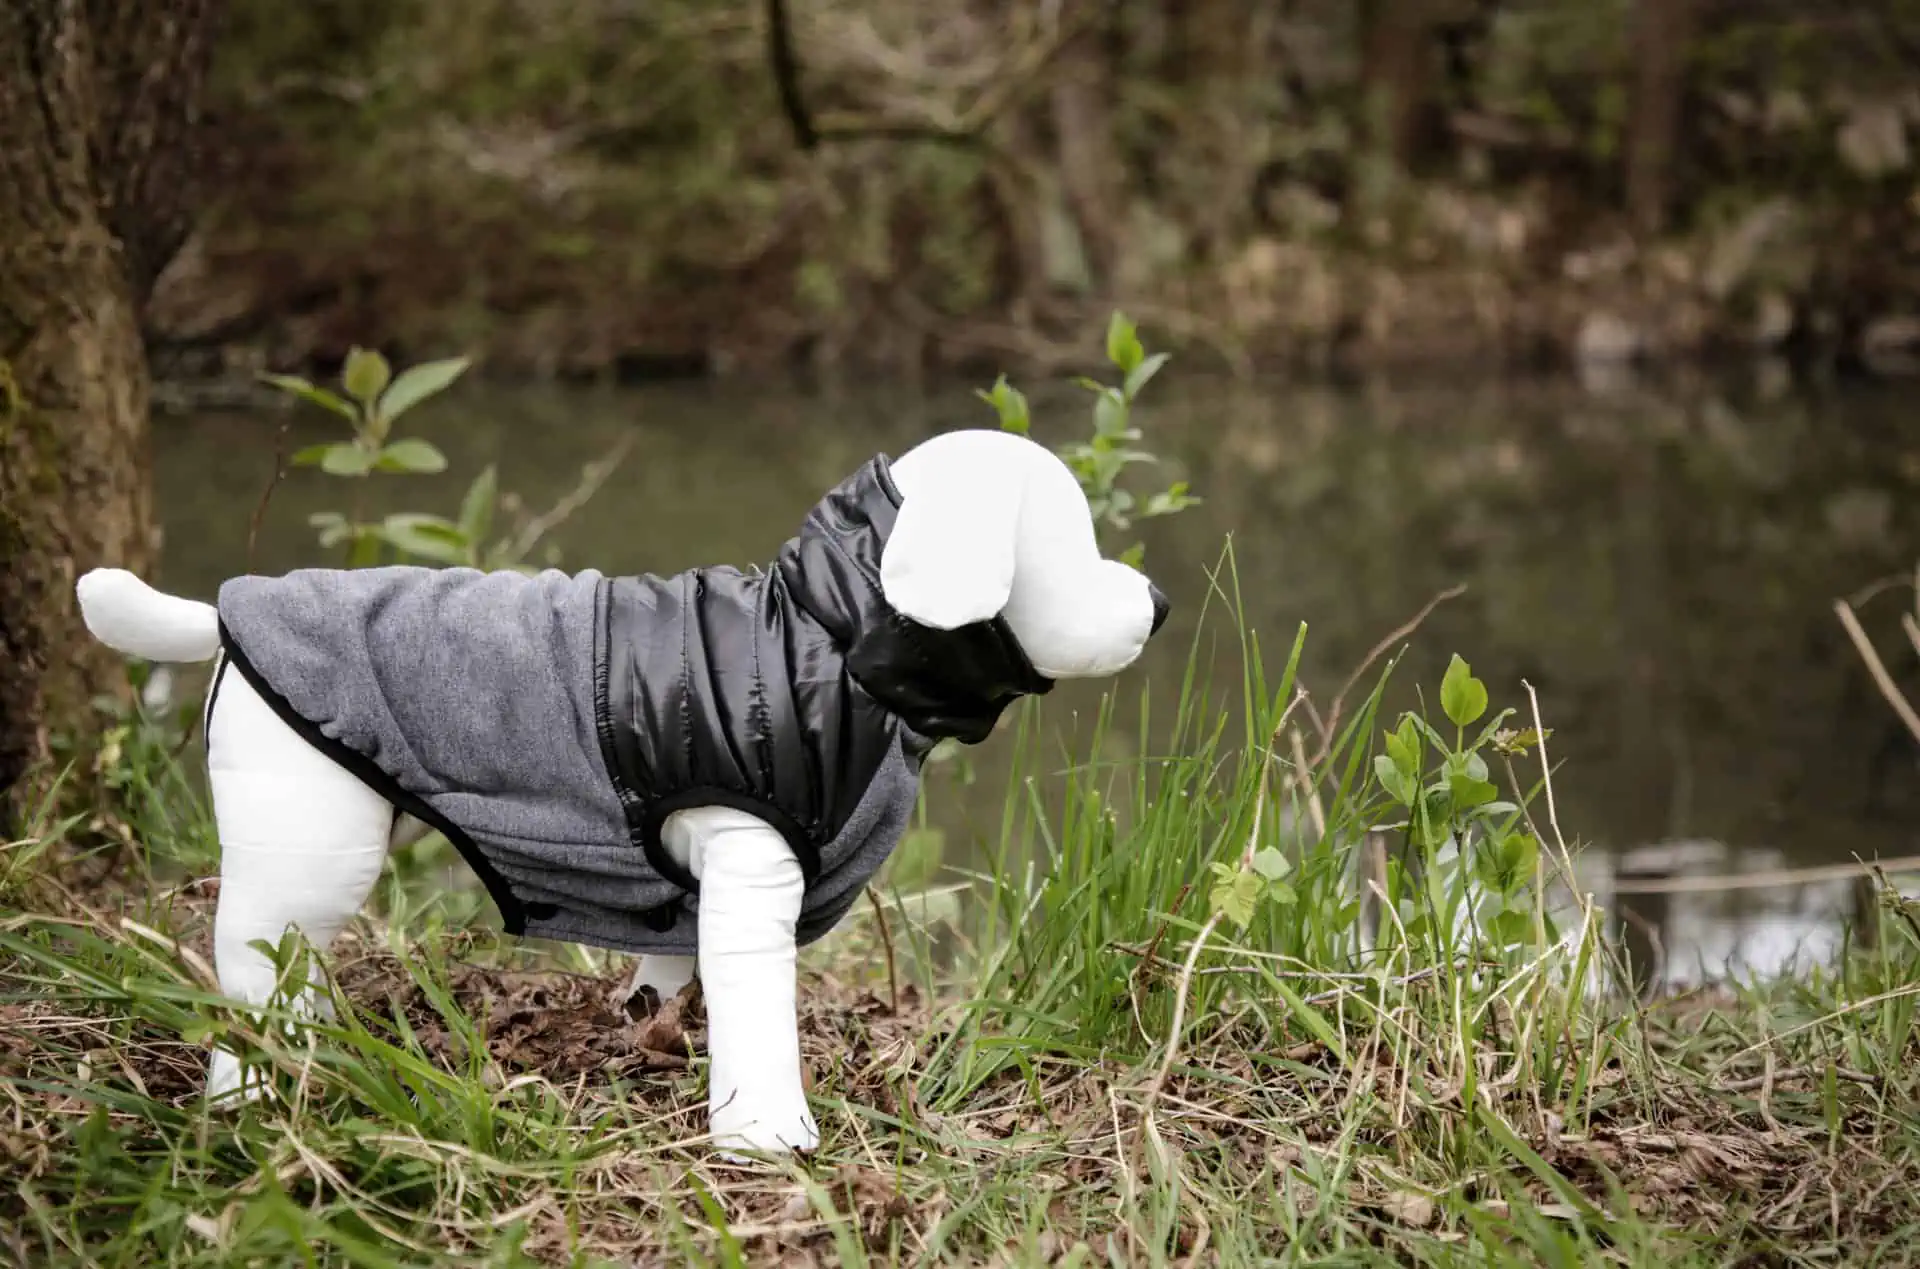 Dog Coat Quebec, grey/black, S 35 cm